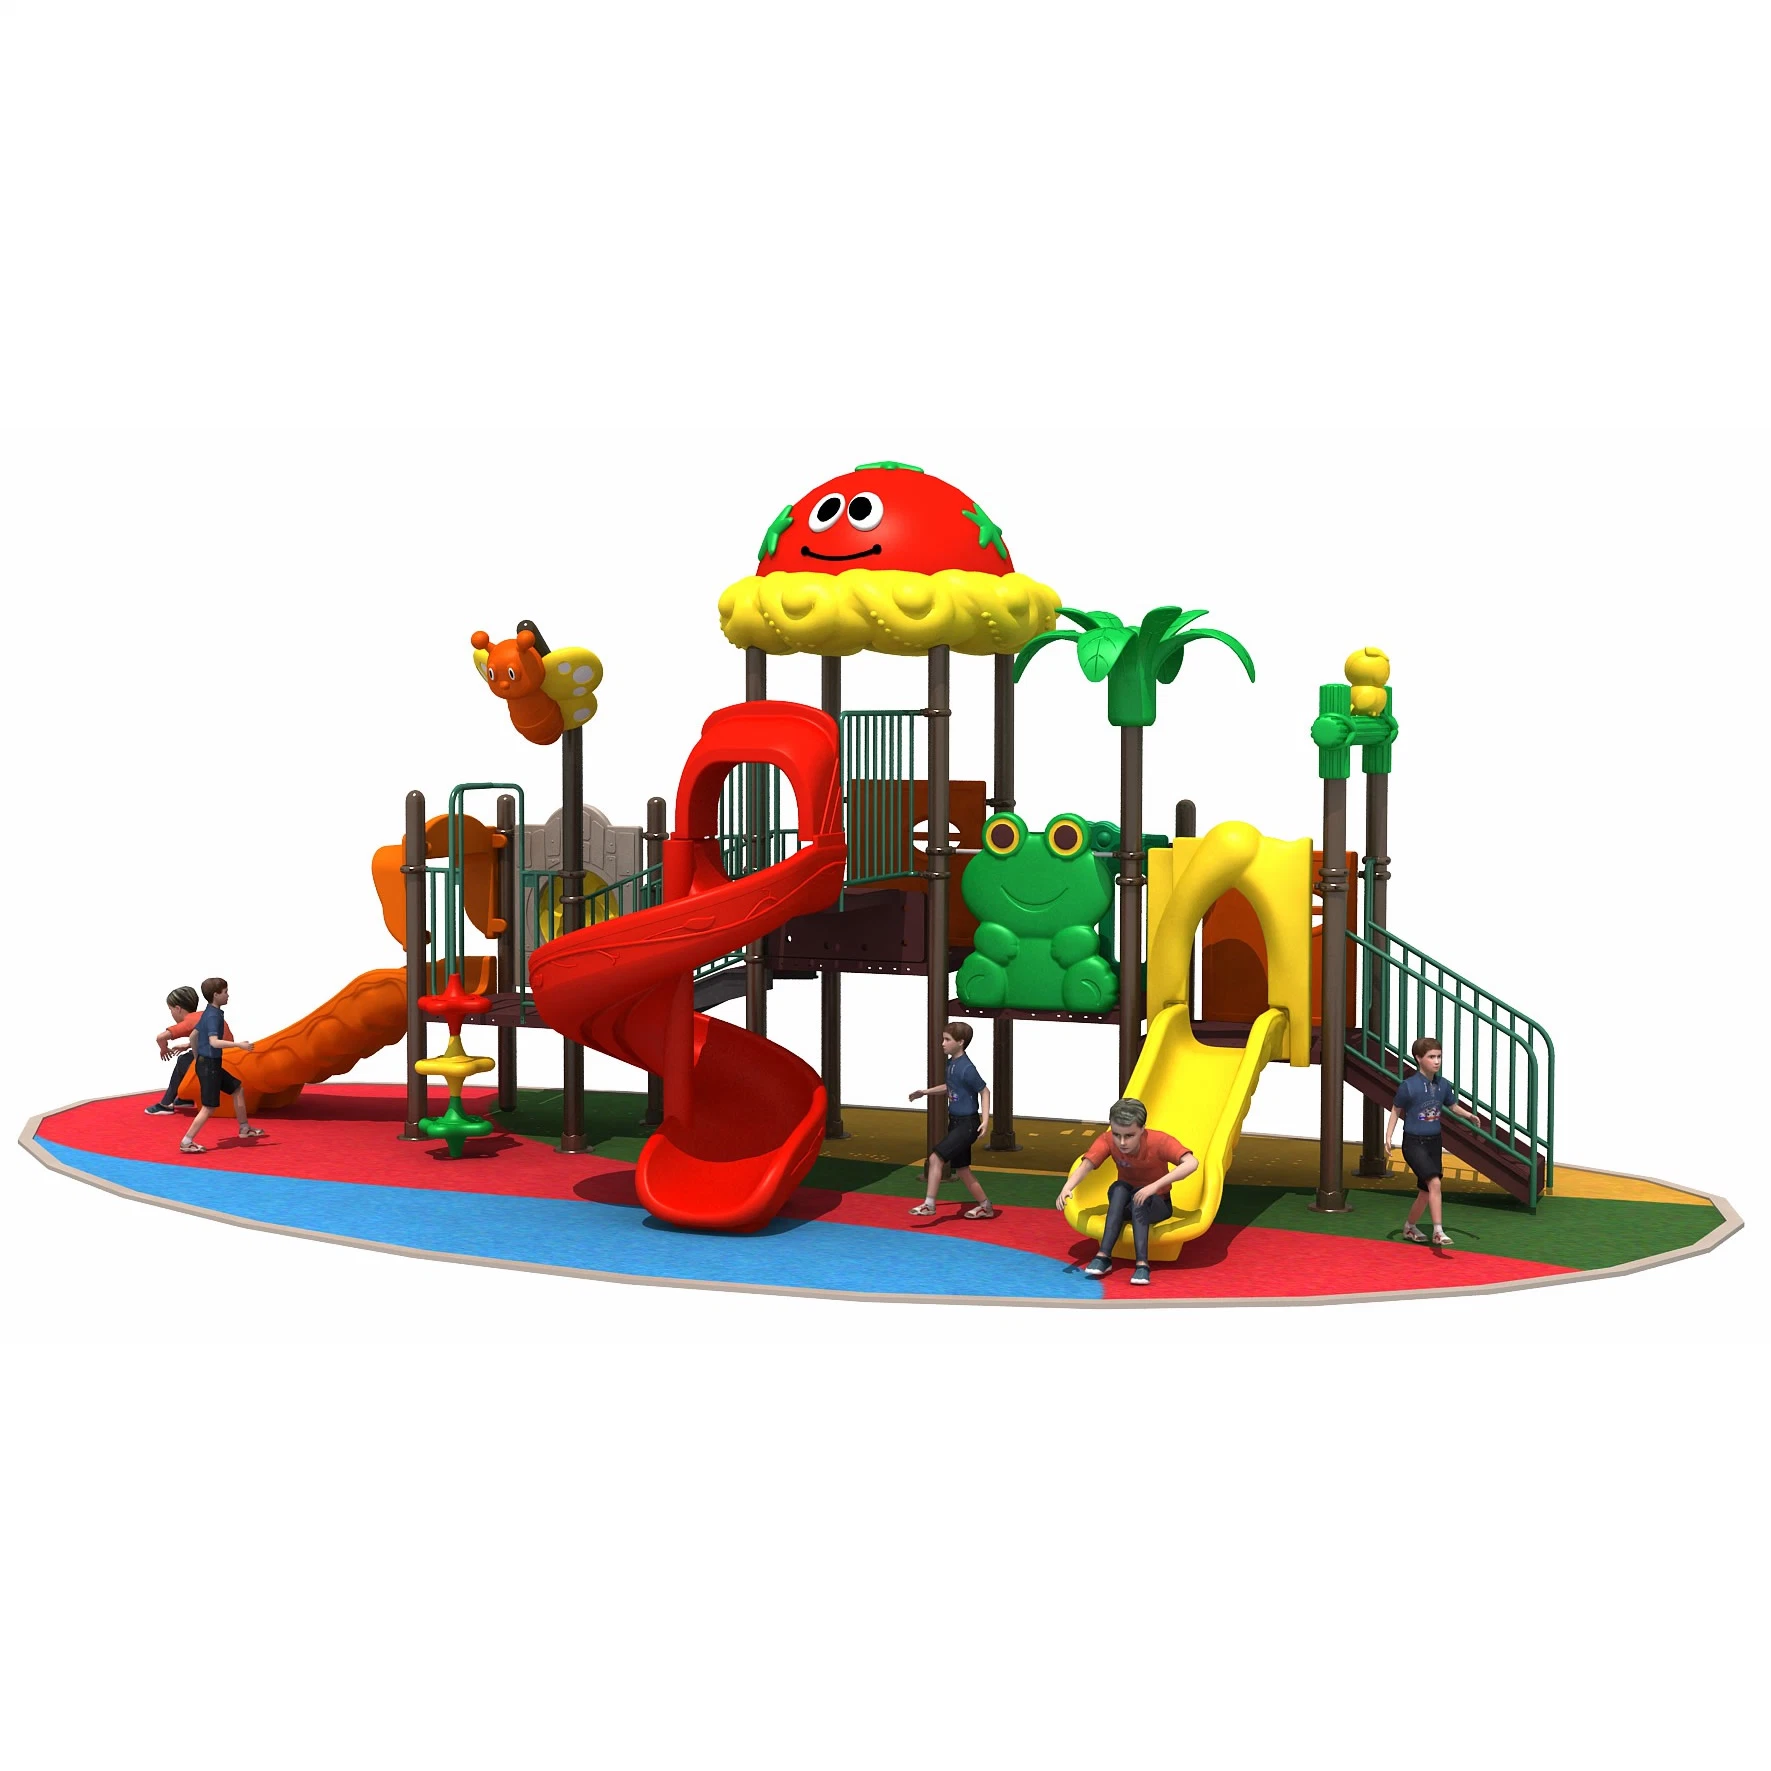 Kids Plastic Slide Used Park Play Games Amusement Park Outdoor Playground